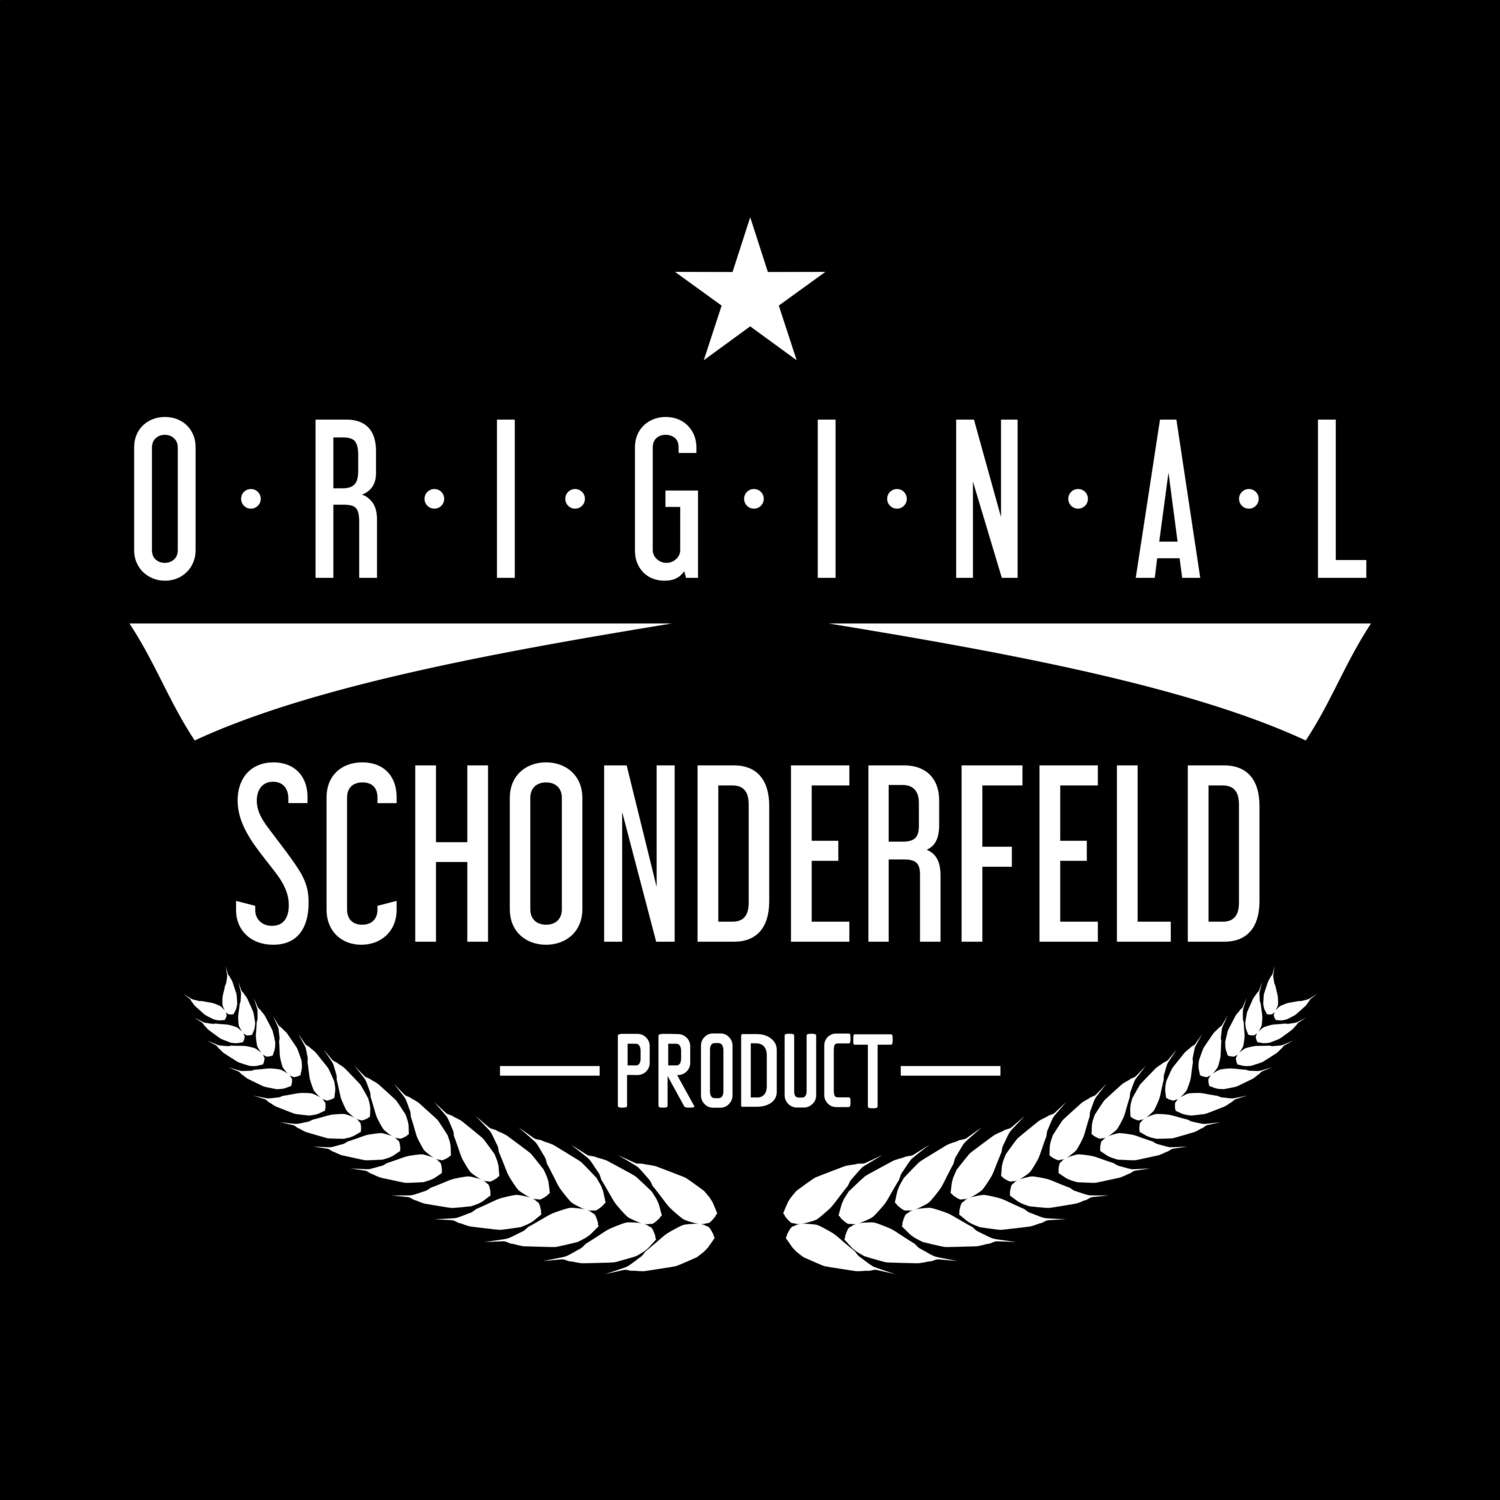 Schonderfeld T-Shirt »Original Product«